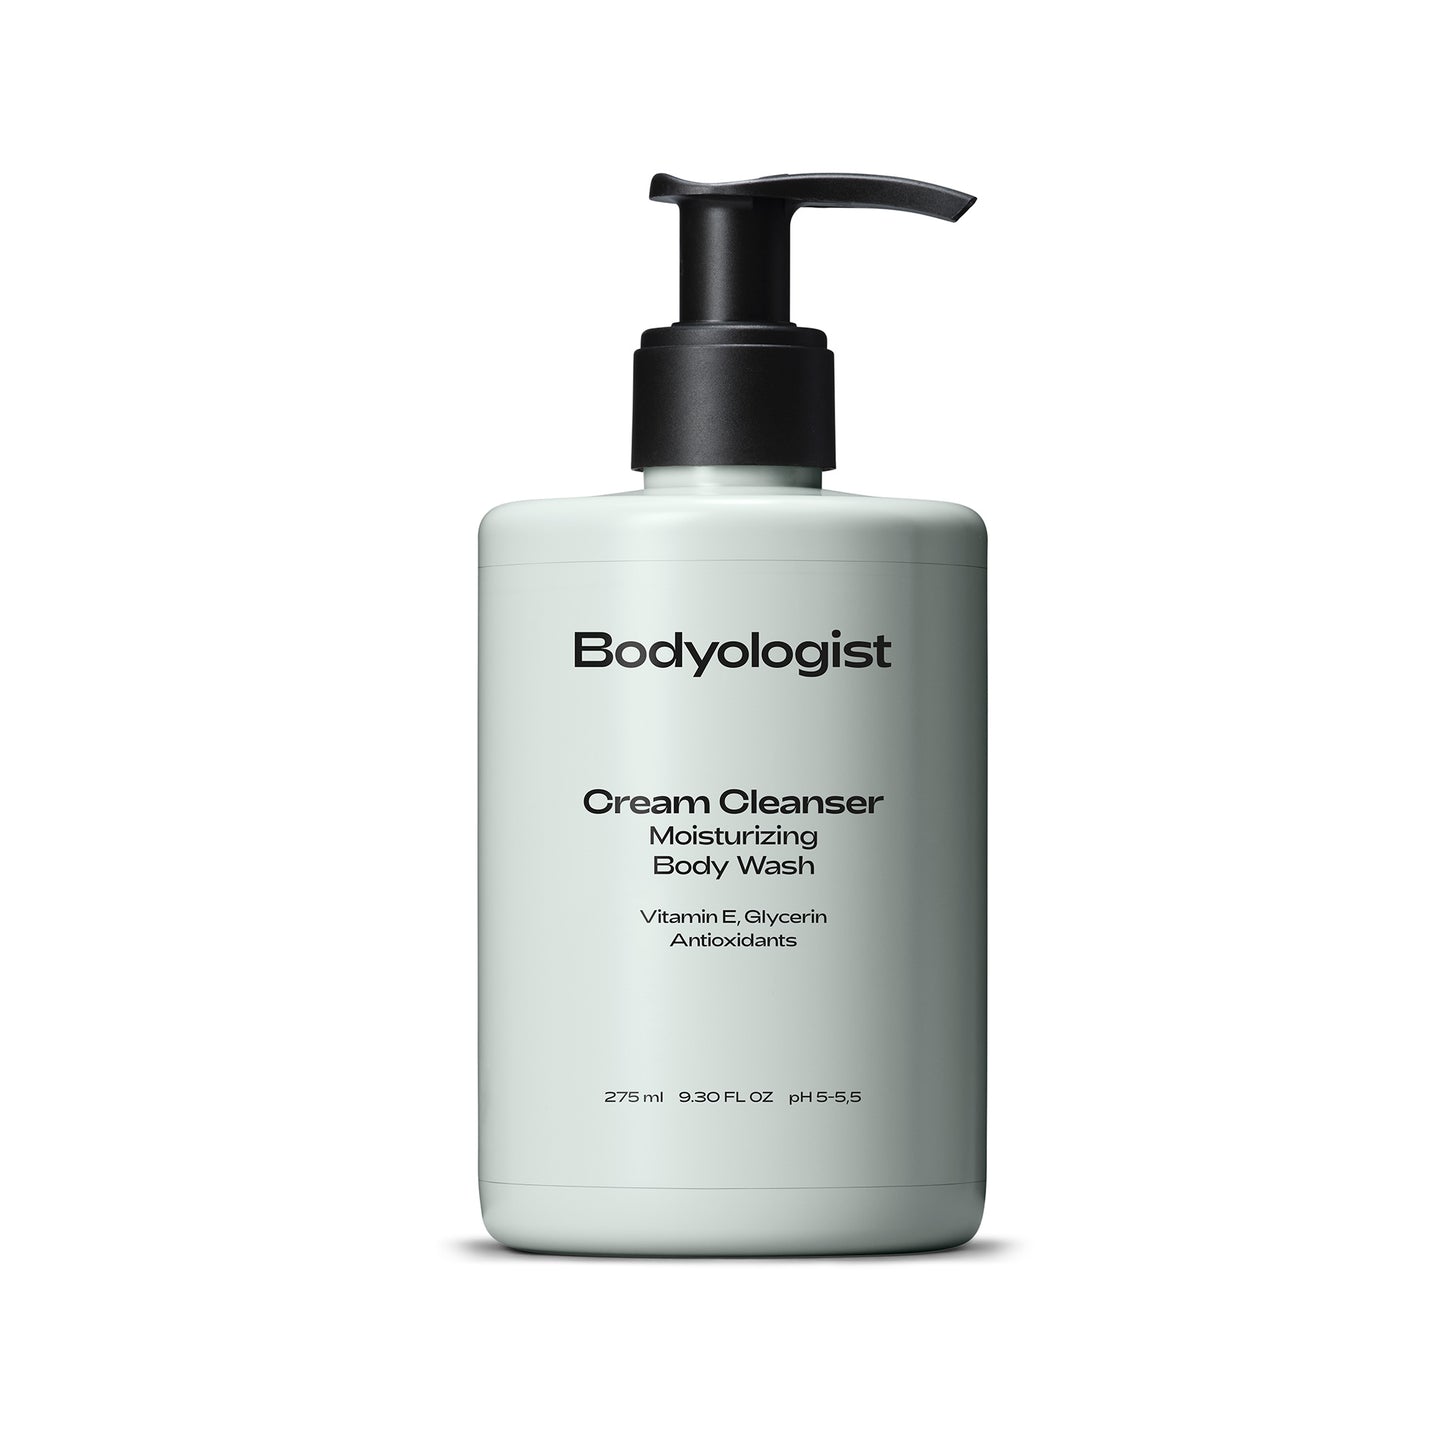 Bodyologist Cream Cleanser Moisturizing Body Wash